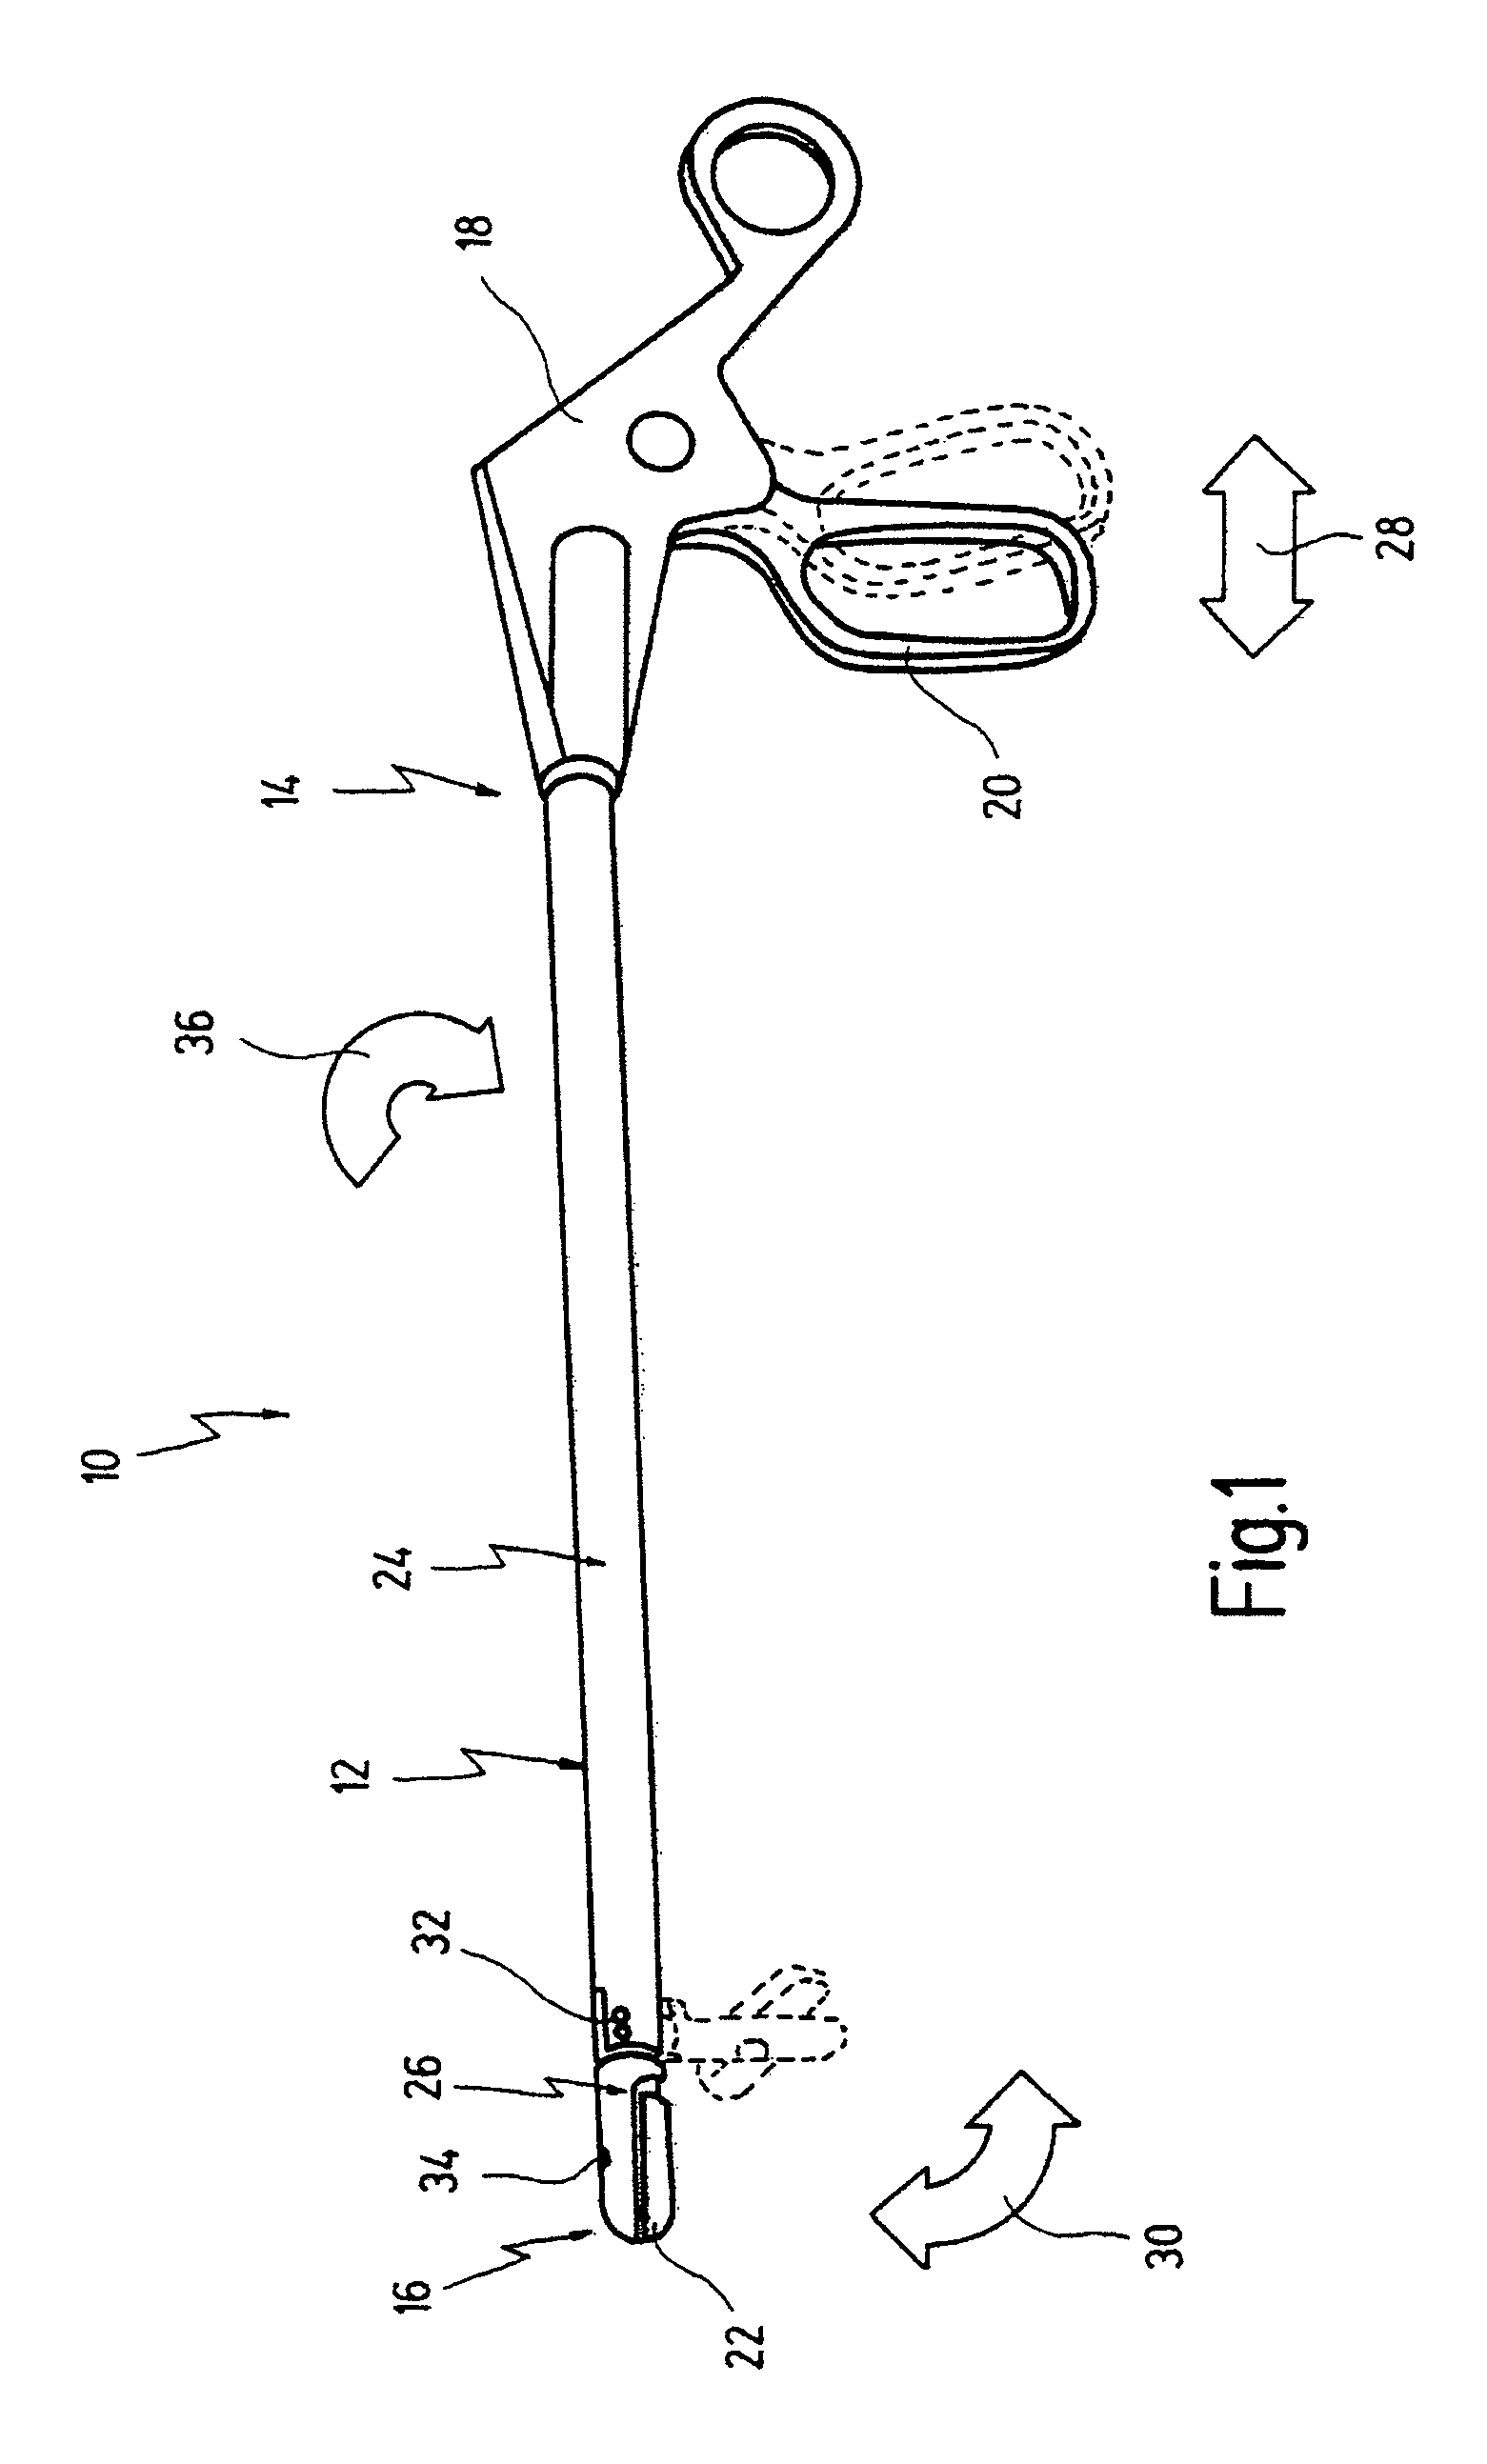 Articulating endoscopic instrument